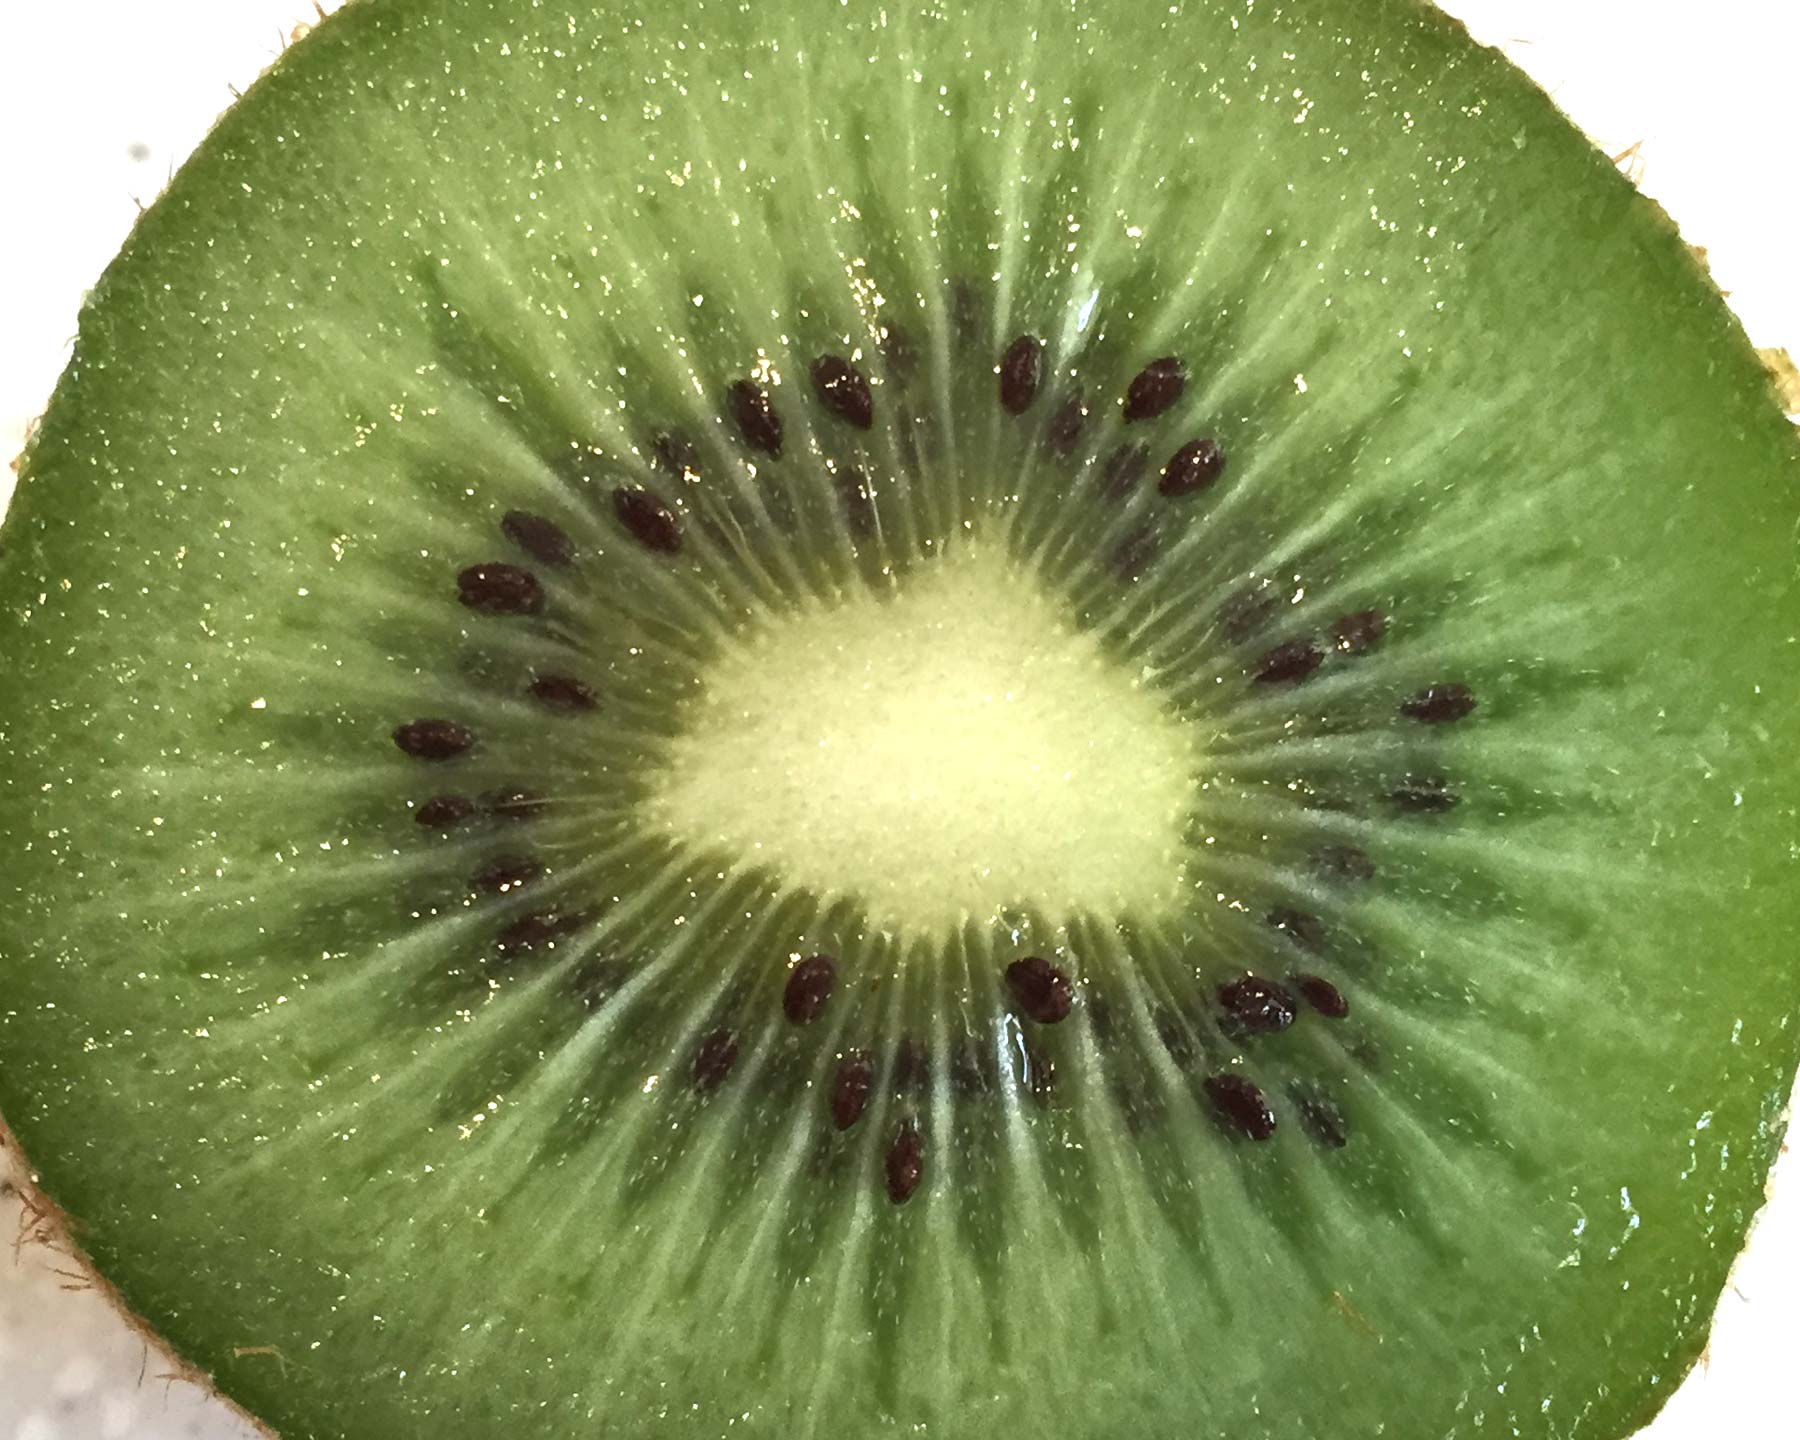 The green flesh and black seeds of Kiwi Fruit